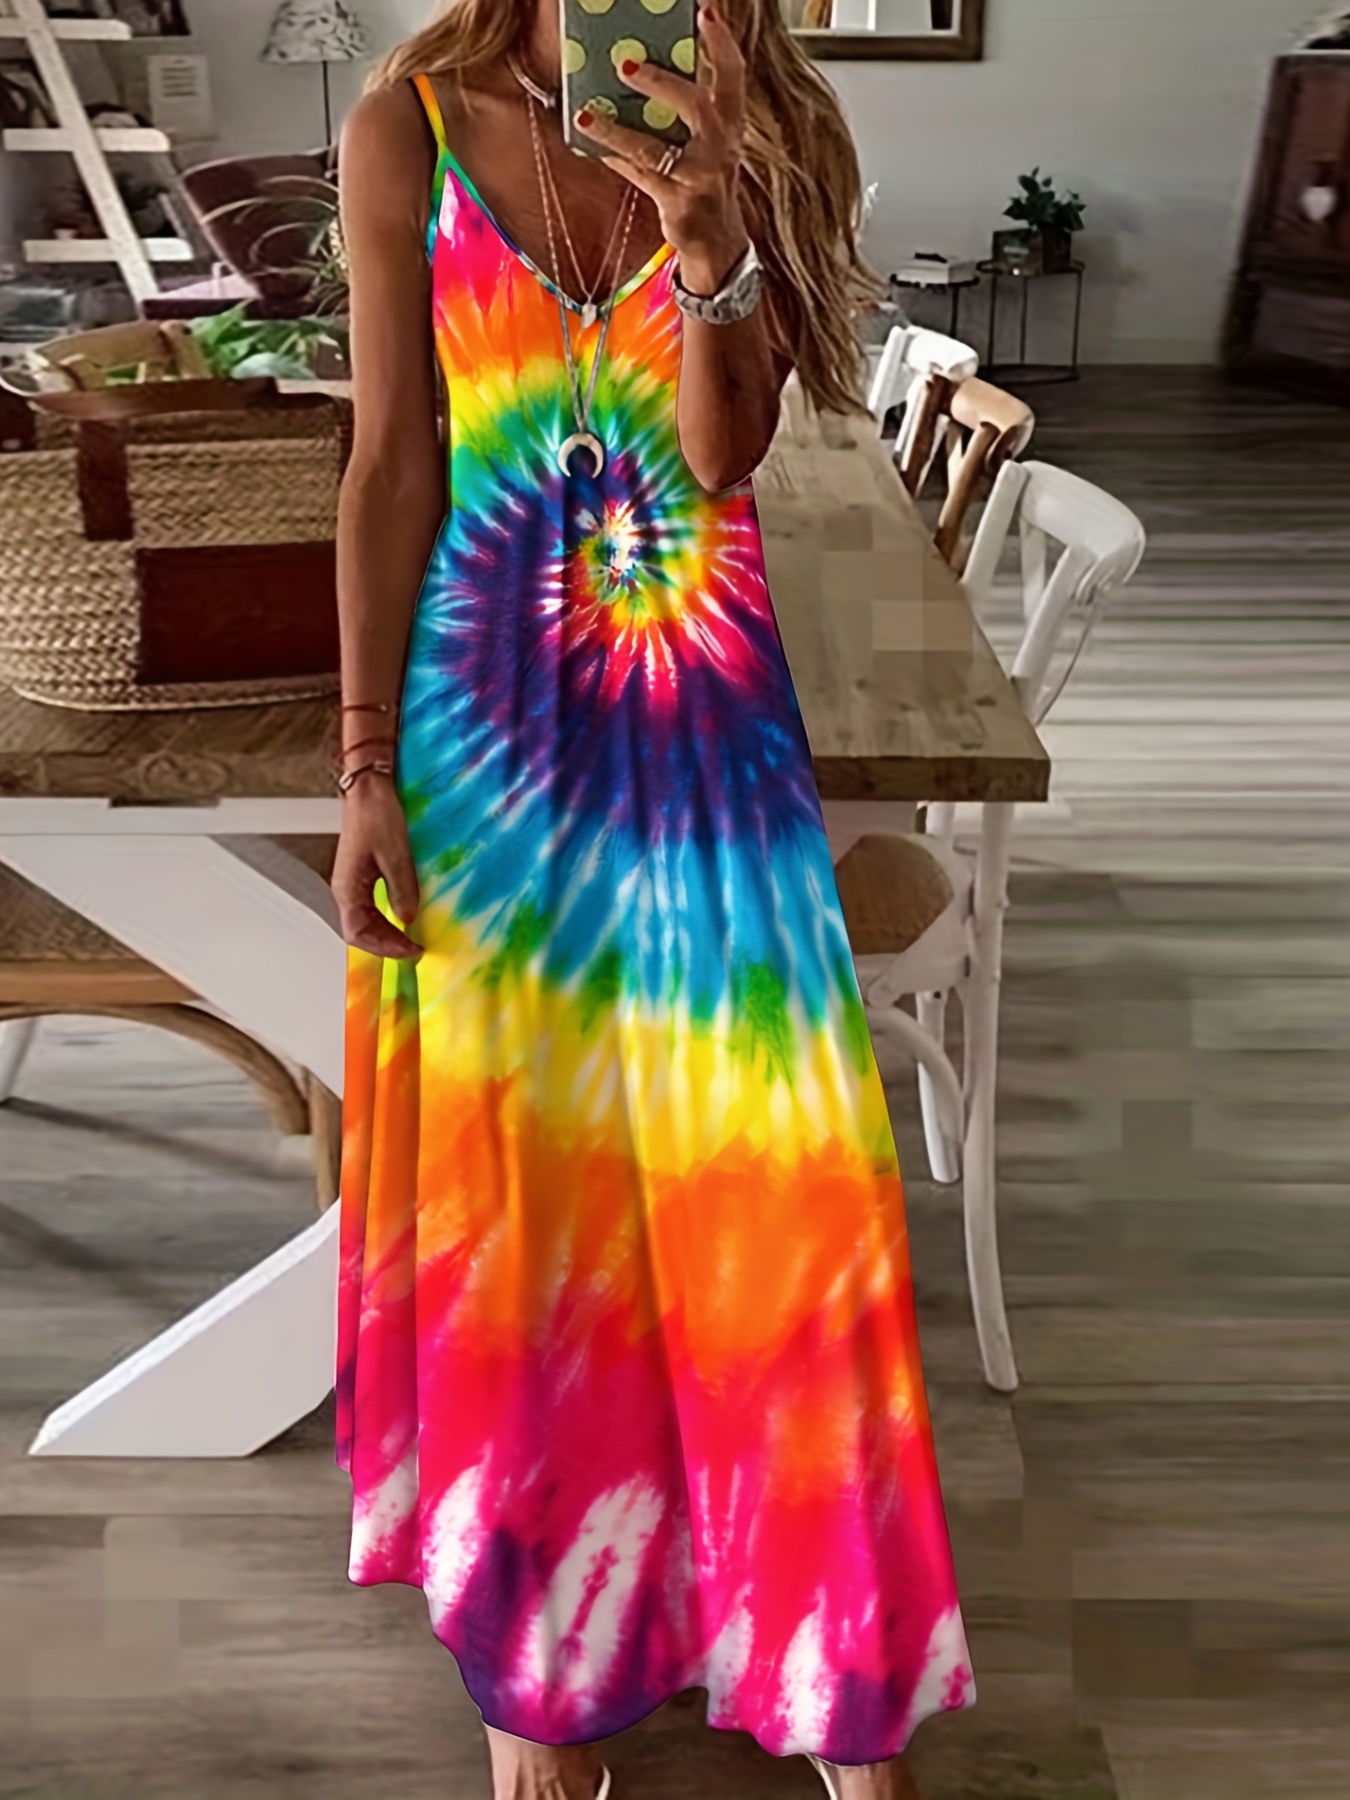 ASOS DESIGN plait maxi beach dress in tie dye